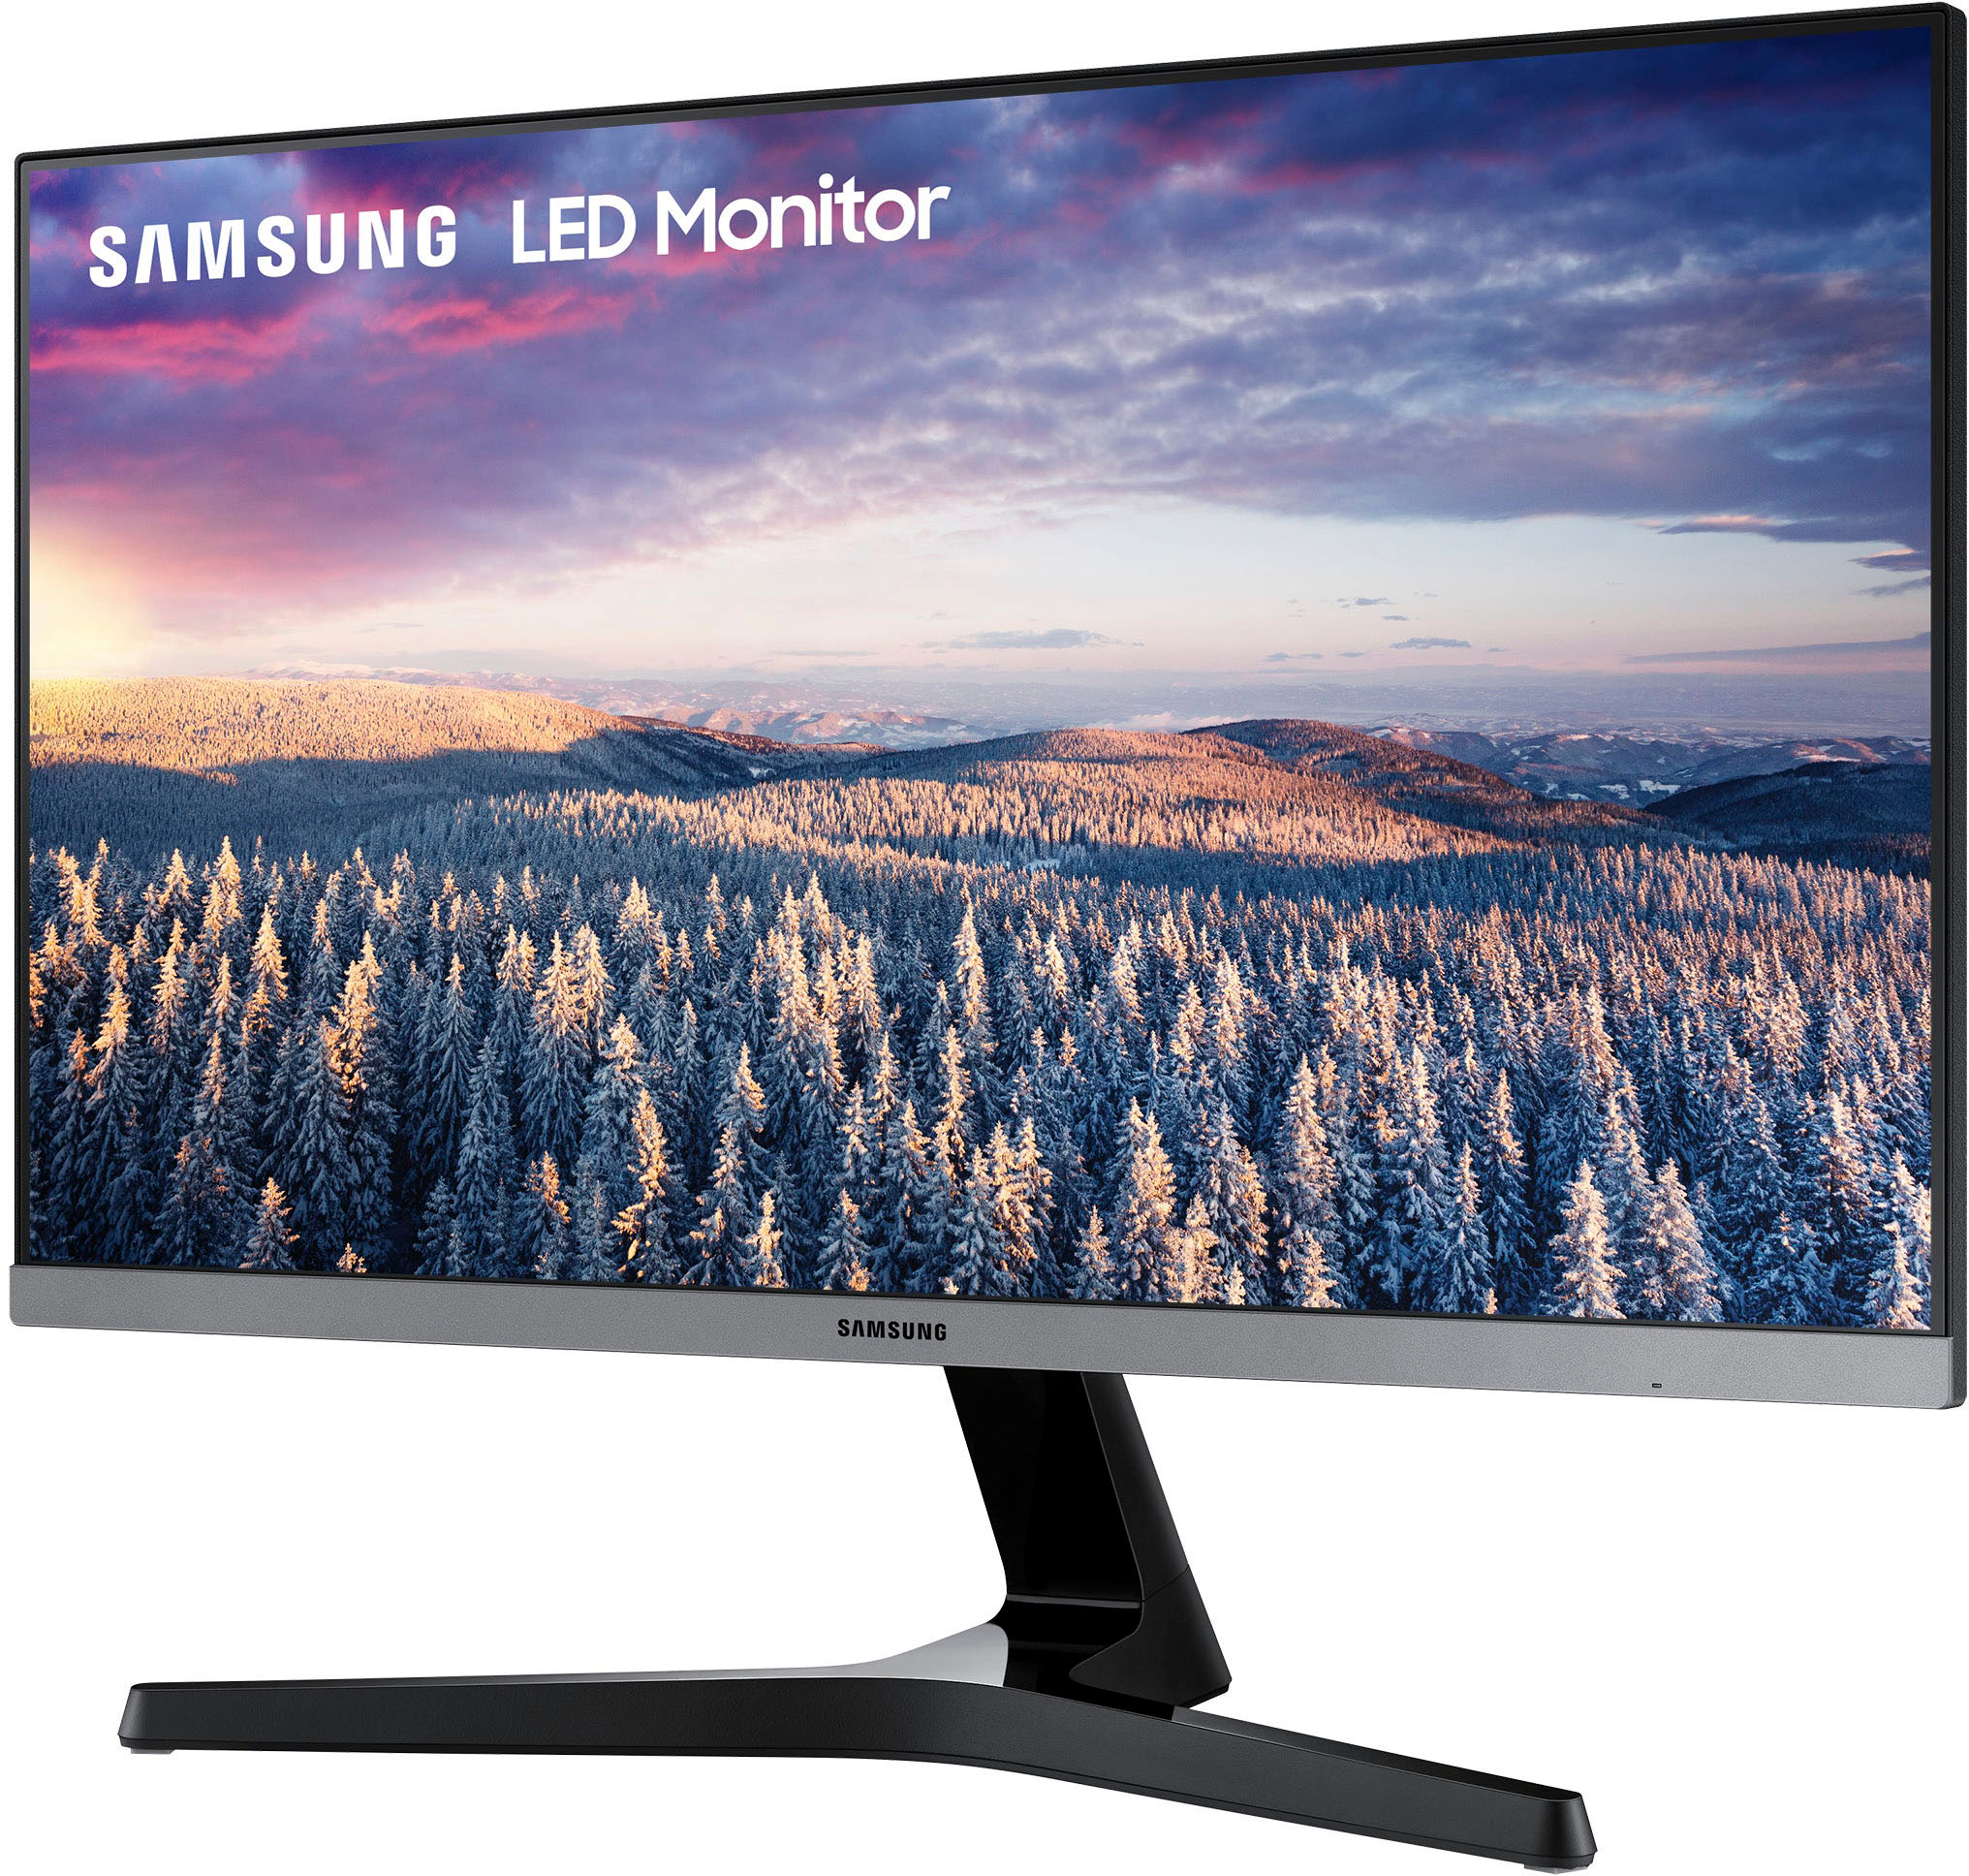 Expresión Endulzar Inclinado Samsung 24" LED FHD AMD FreeSync Monitor with bezel-less design (HDMI,  D-sub) Black LS24R35AFHNXZA - Best Buy